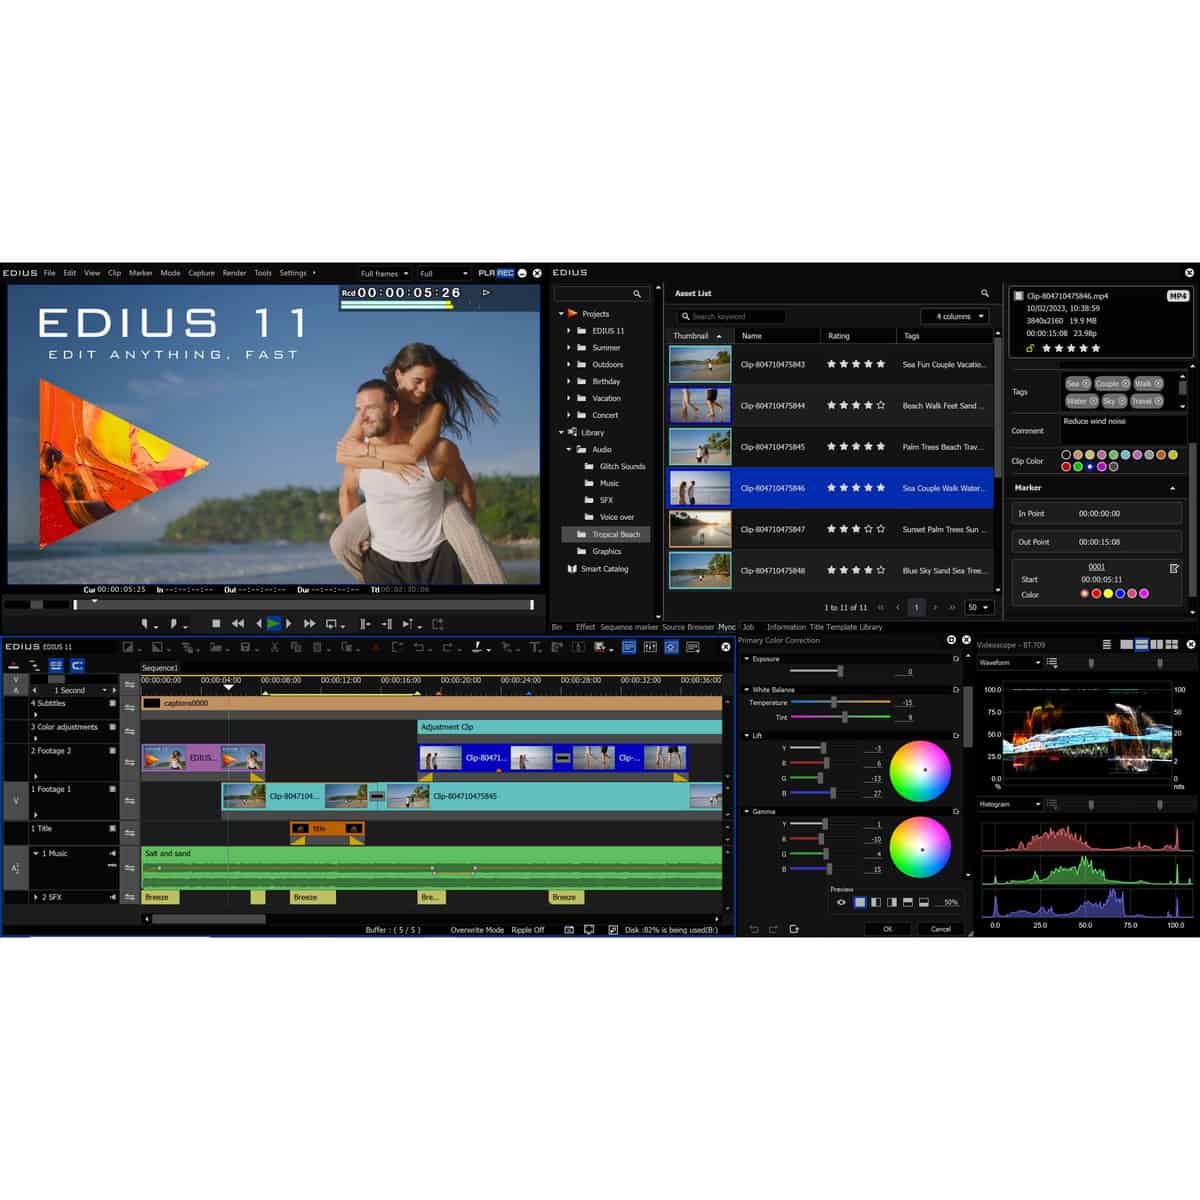 EDIUS 11 Workgroup Video Editing Software Jump Upgrade from EDIUS 2-9, EDIUS X/11 Pro, Download Only